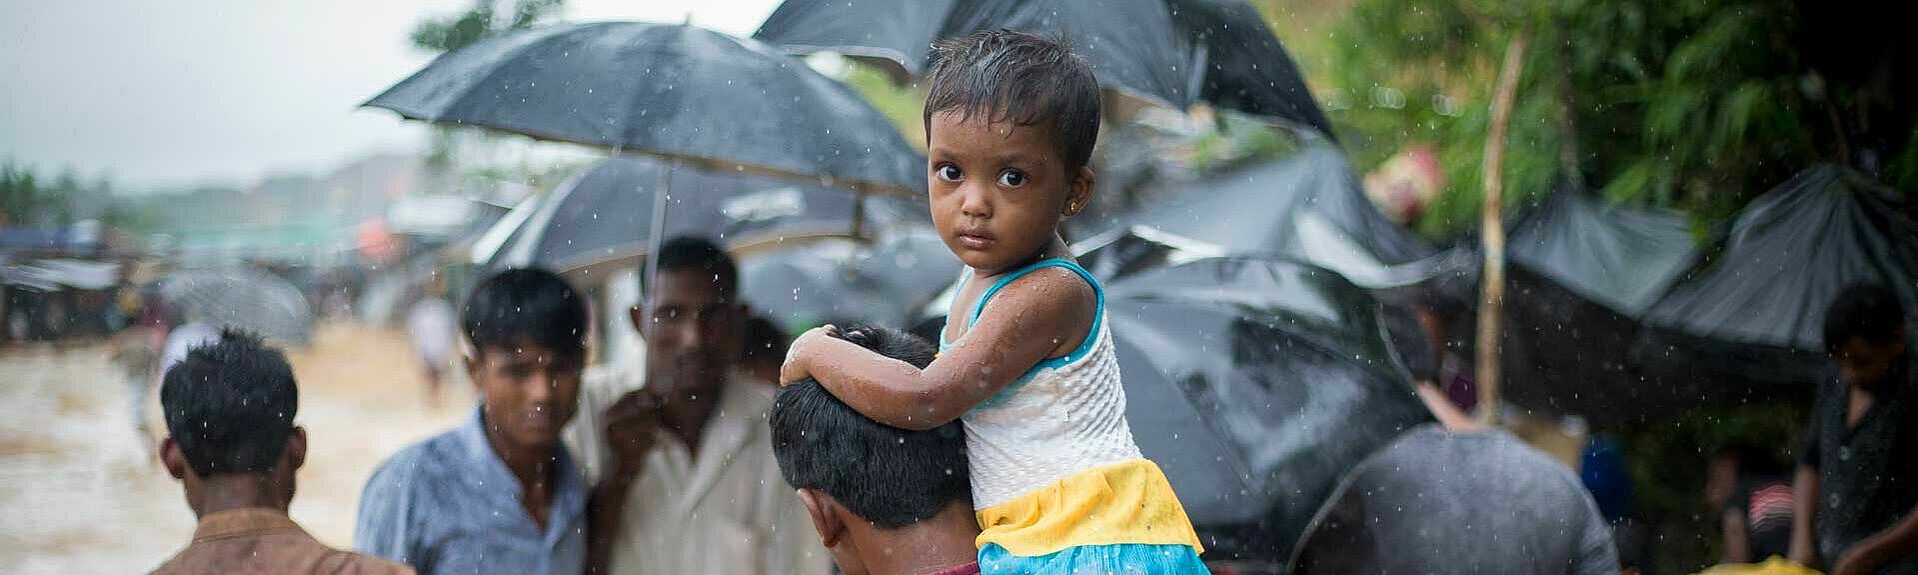 Nothilfe Rohingya Flüchtlinge